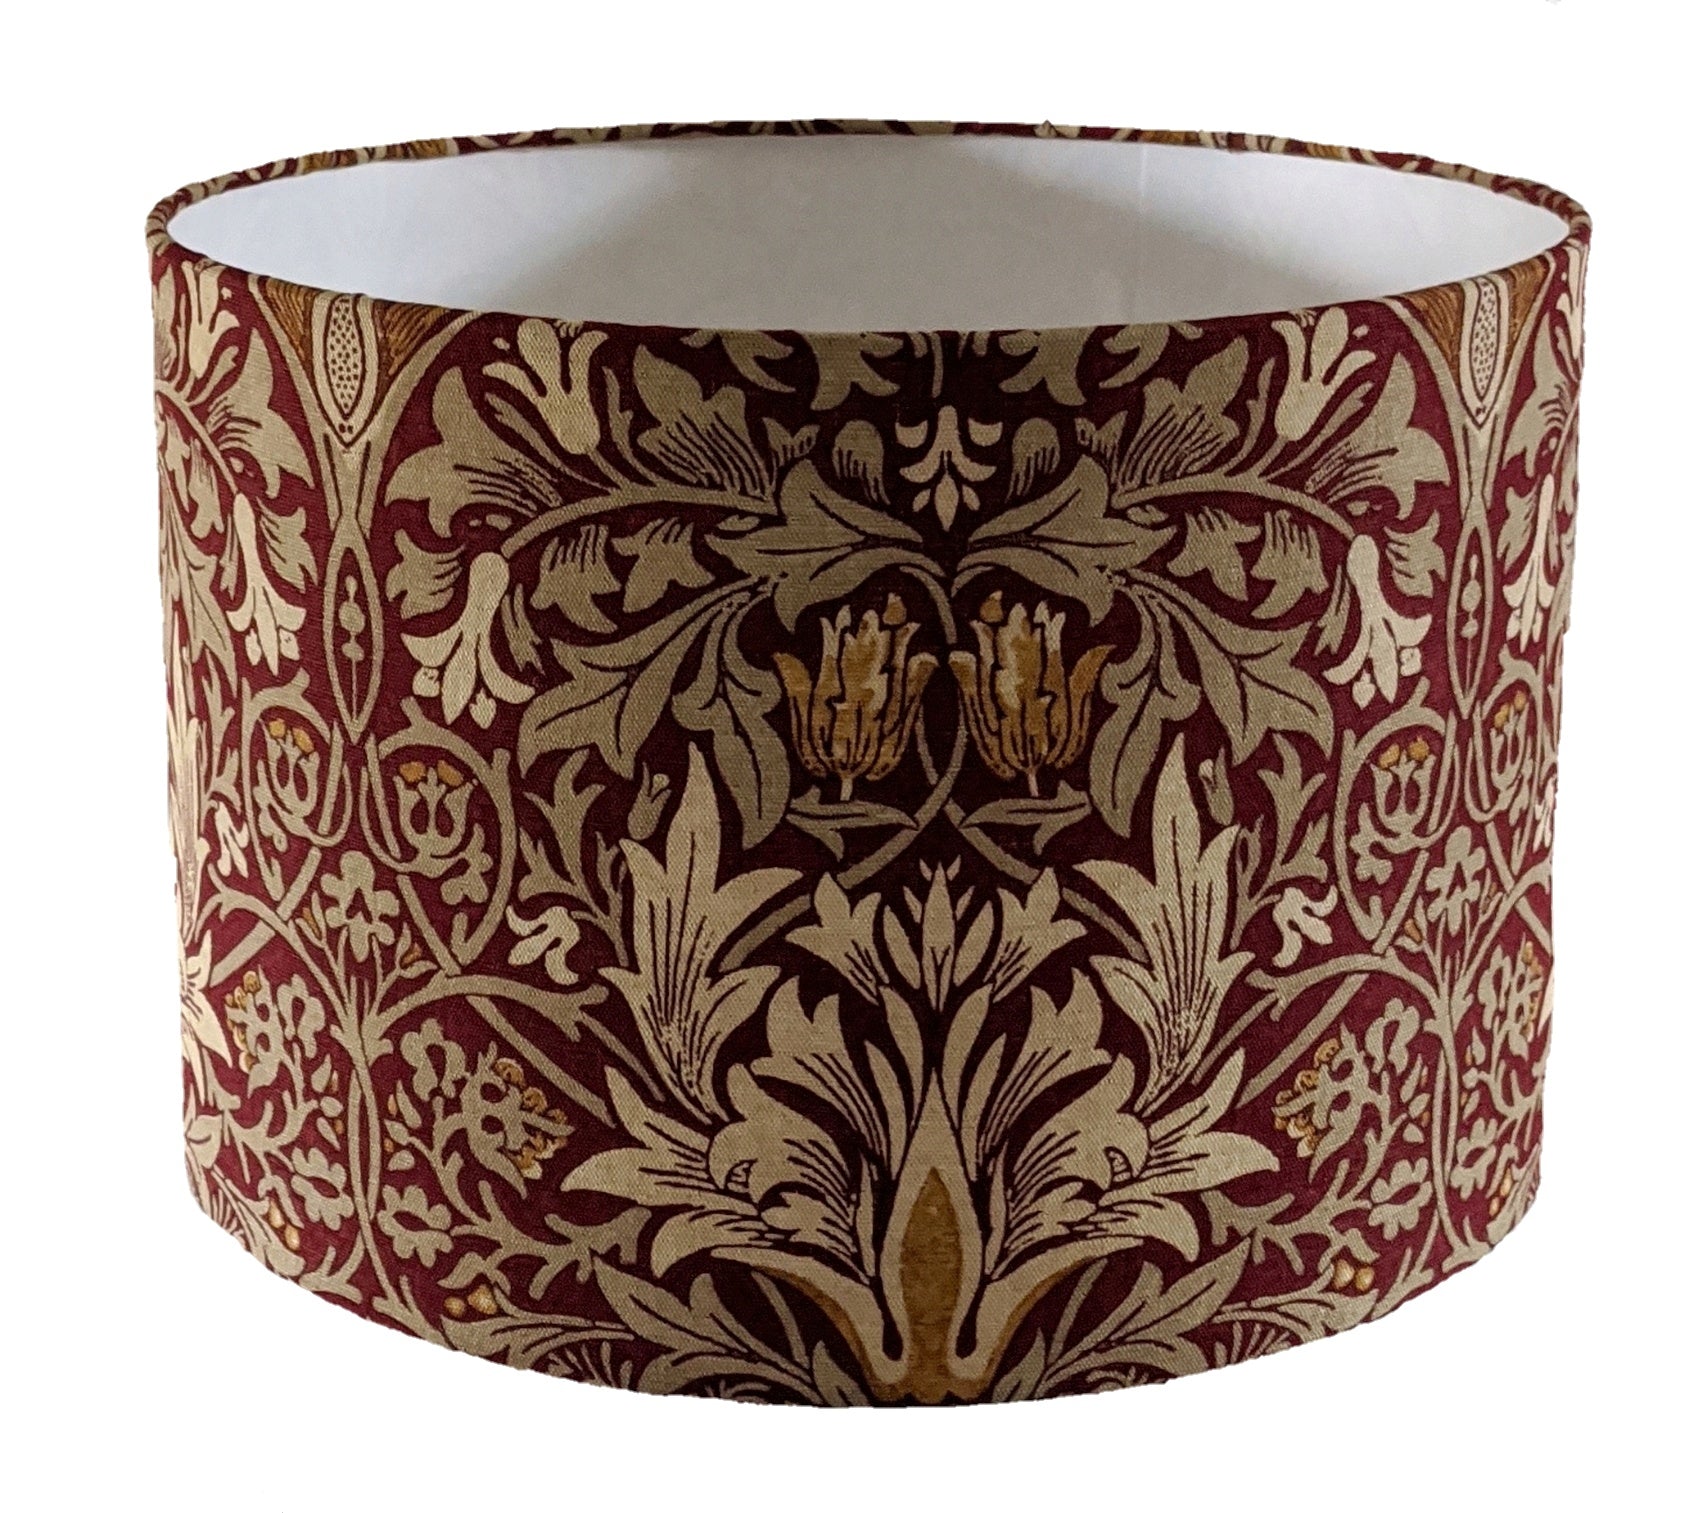 William Morris claret snakeshead lampshade for a ceiling pendant -  20cm, 30cm and 40cm